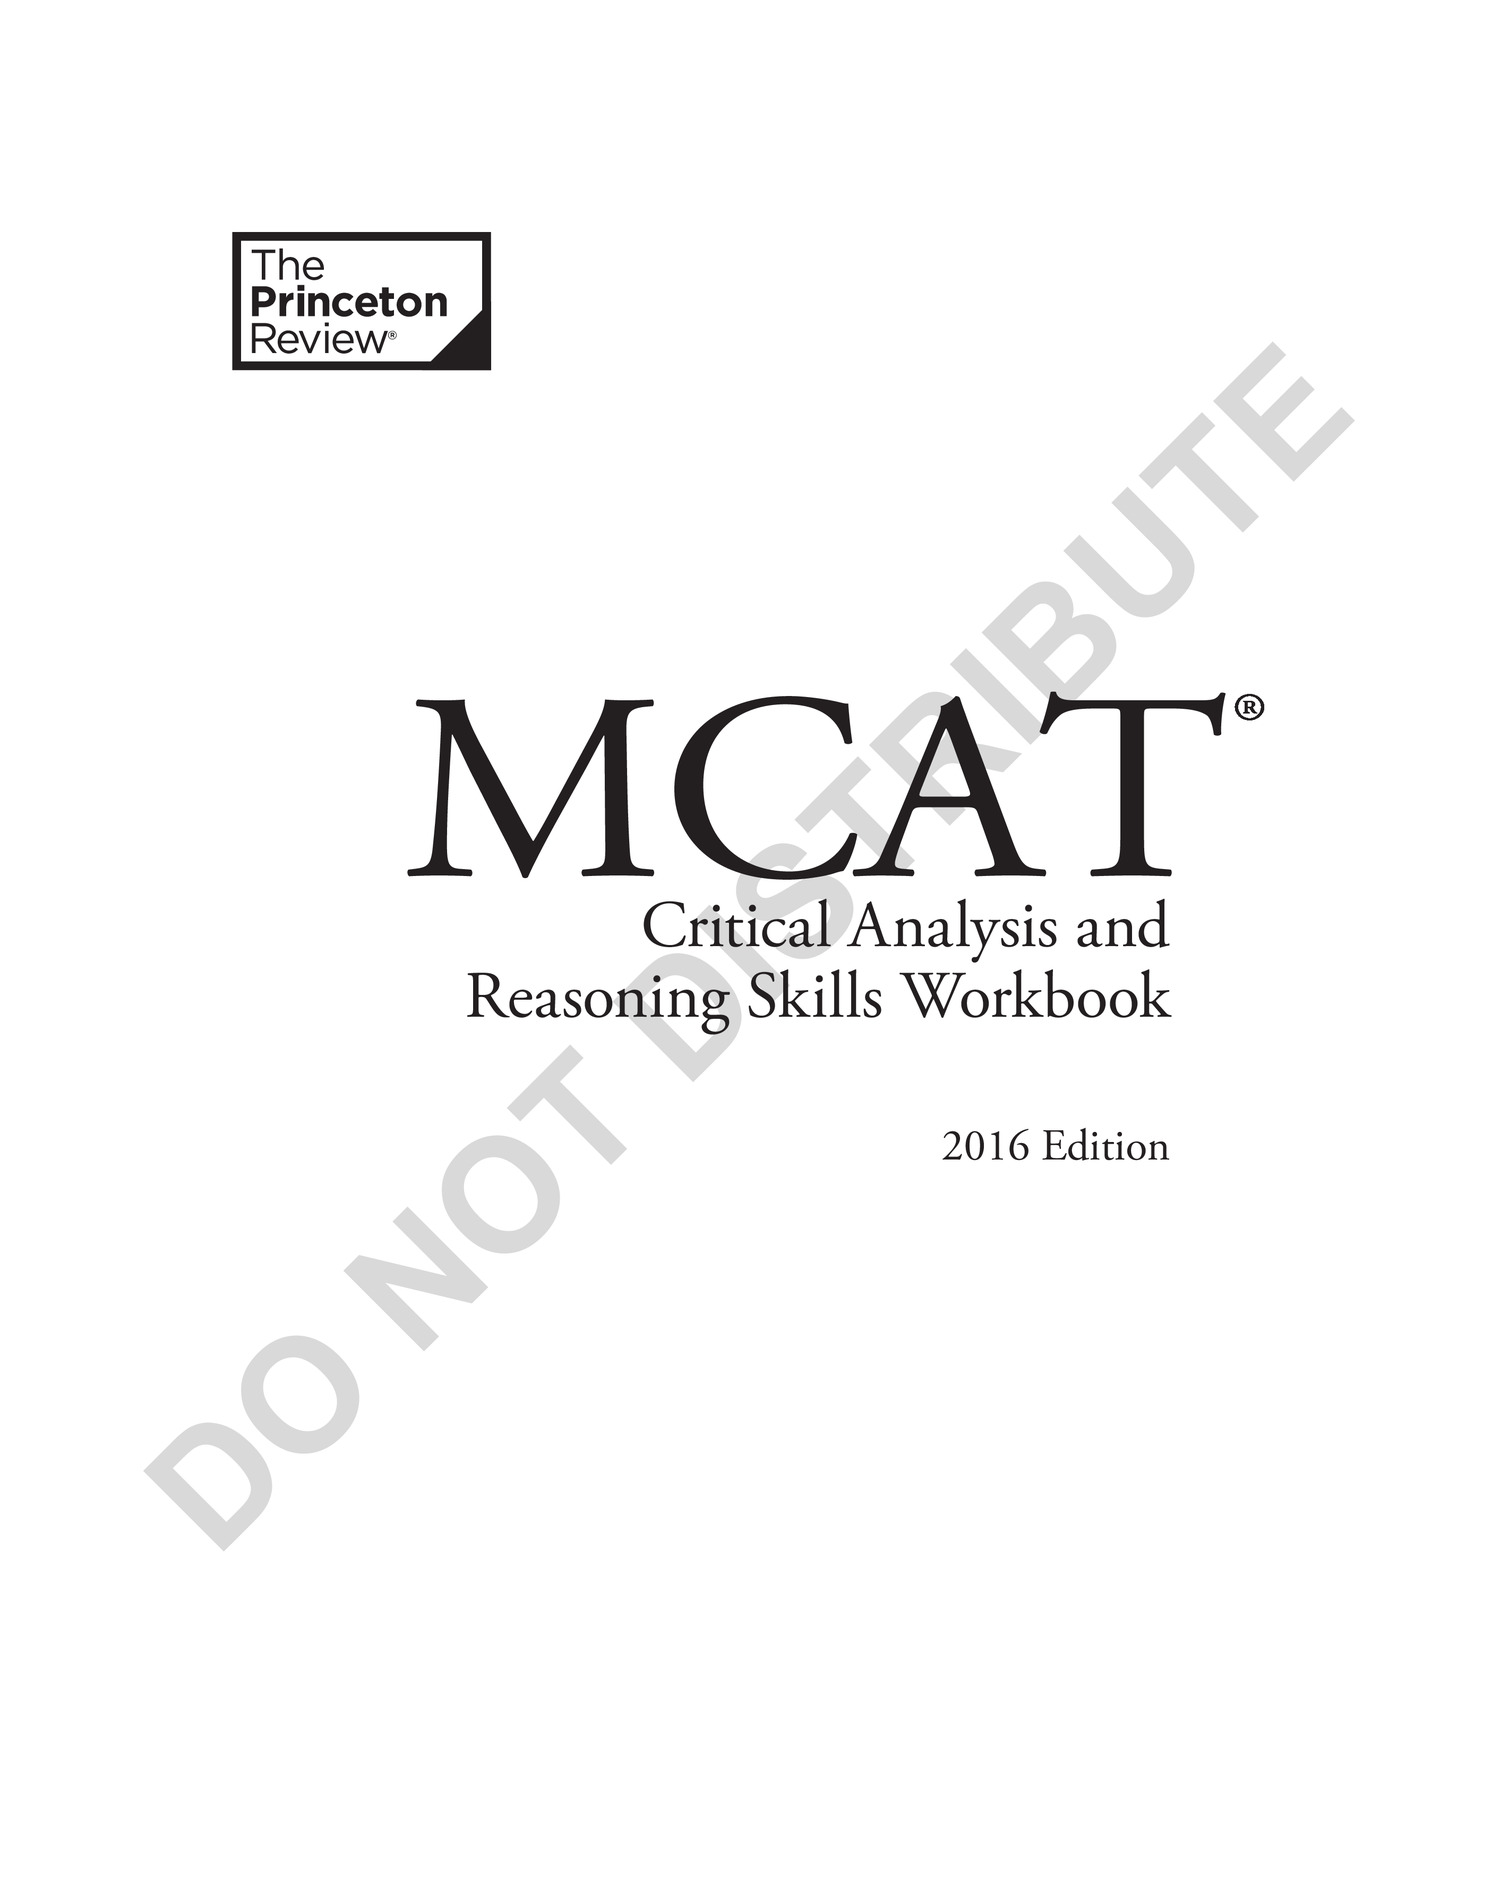 mcat cars passages pdf